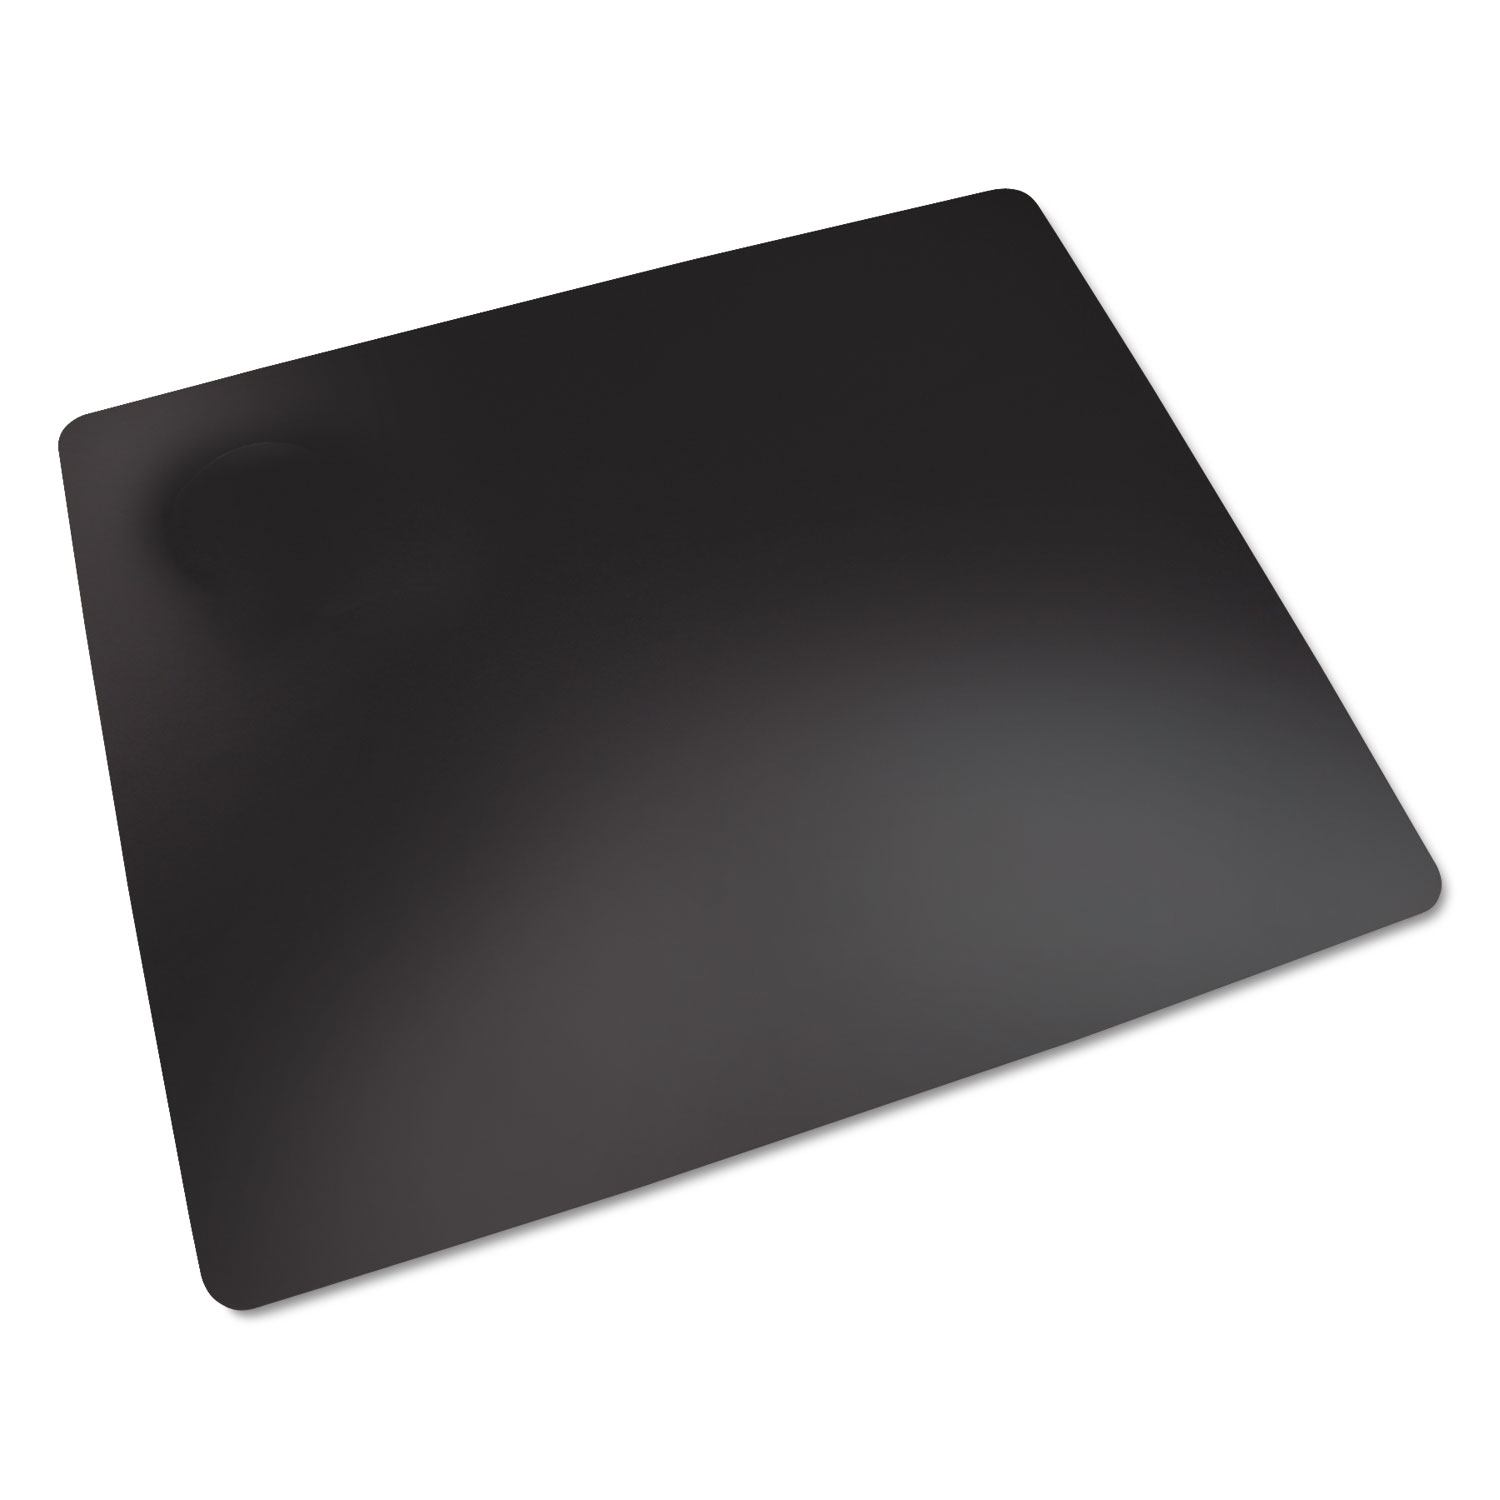  Artistic LT61-2MS Rhinolin II Desk Pad with Antimicrobial Protection, 36 x 20, Black (AOPLT612MS) 